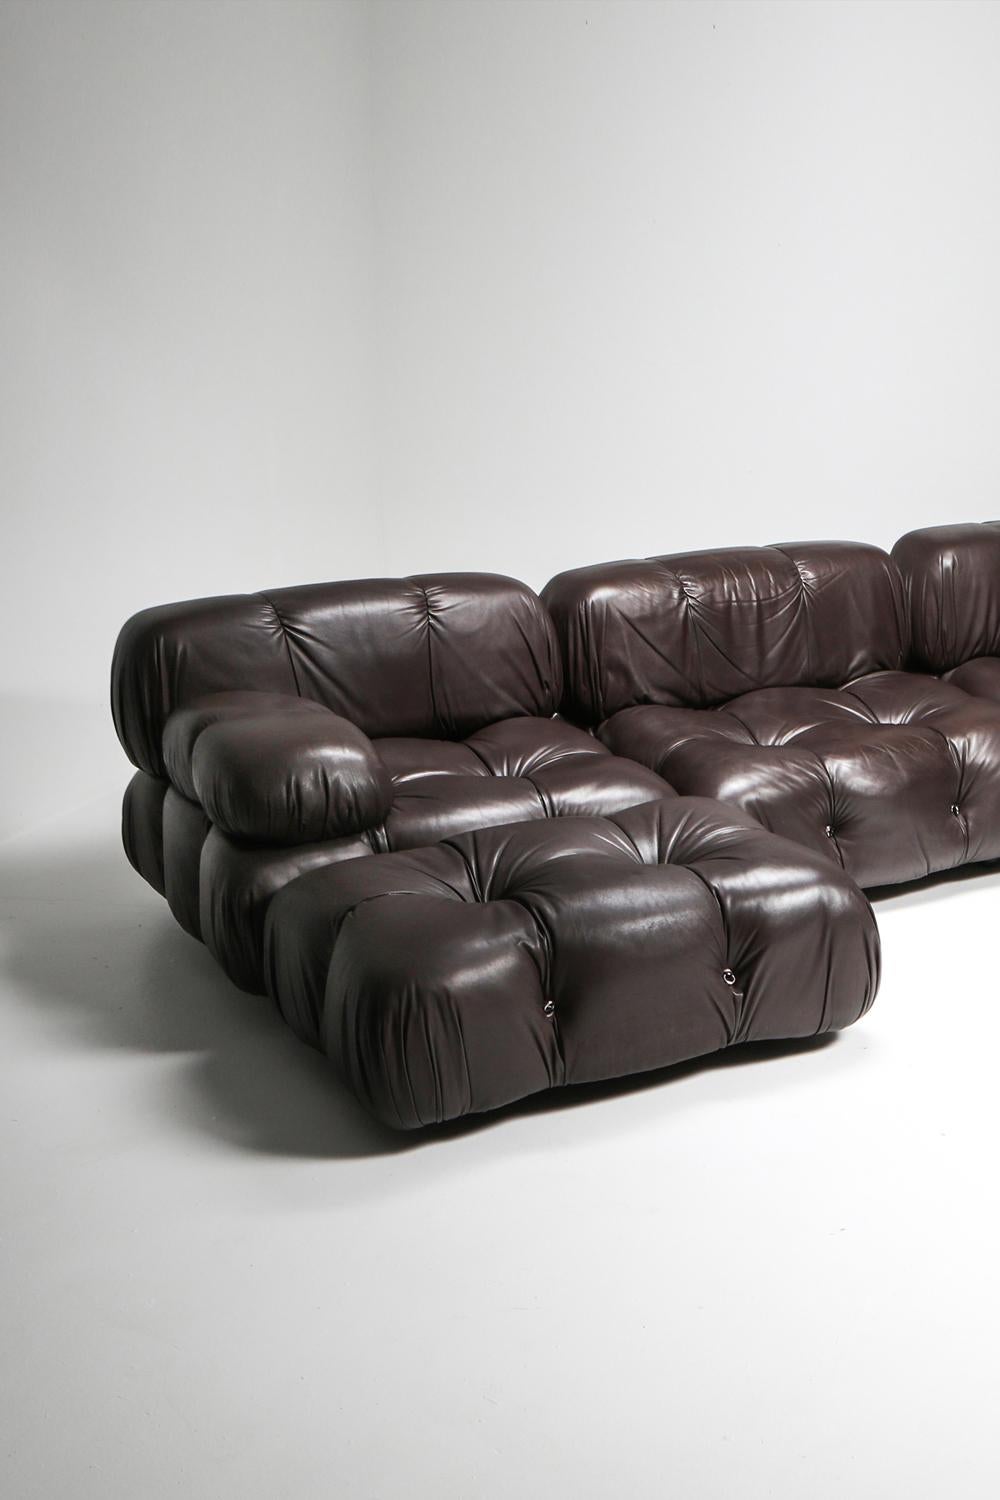 Mario Bellini's Camaleonda Original Sectional Sofa in Chocolate Brown Leather 7